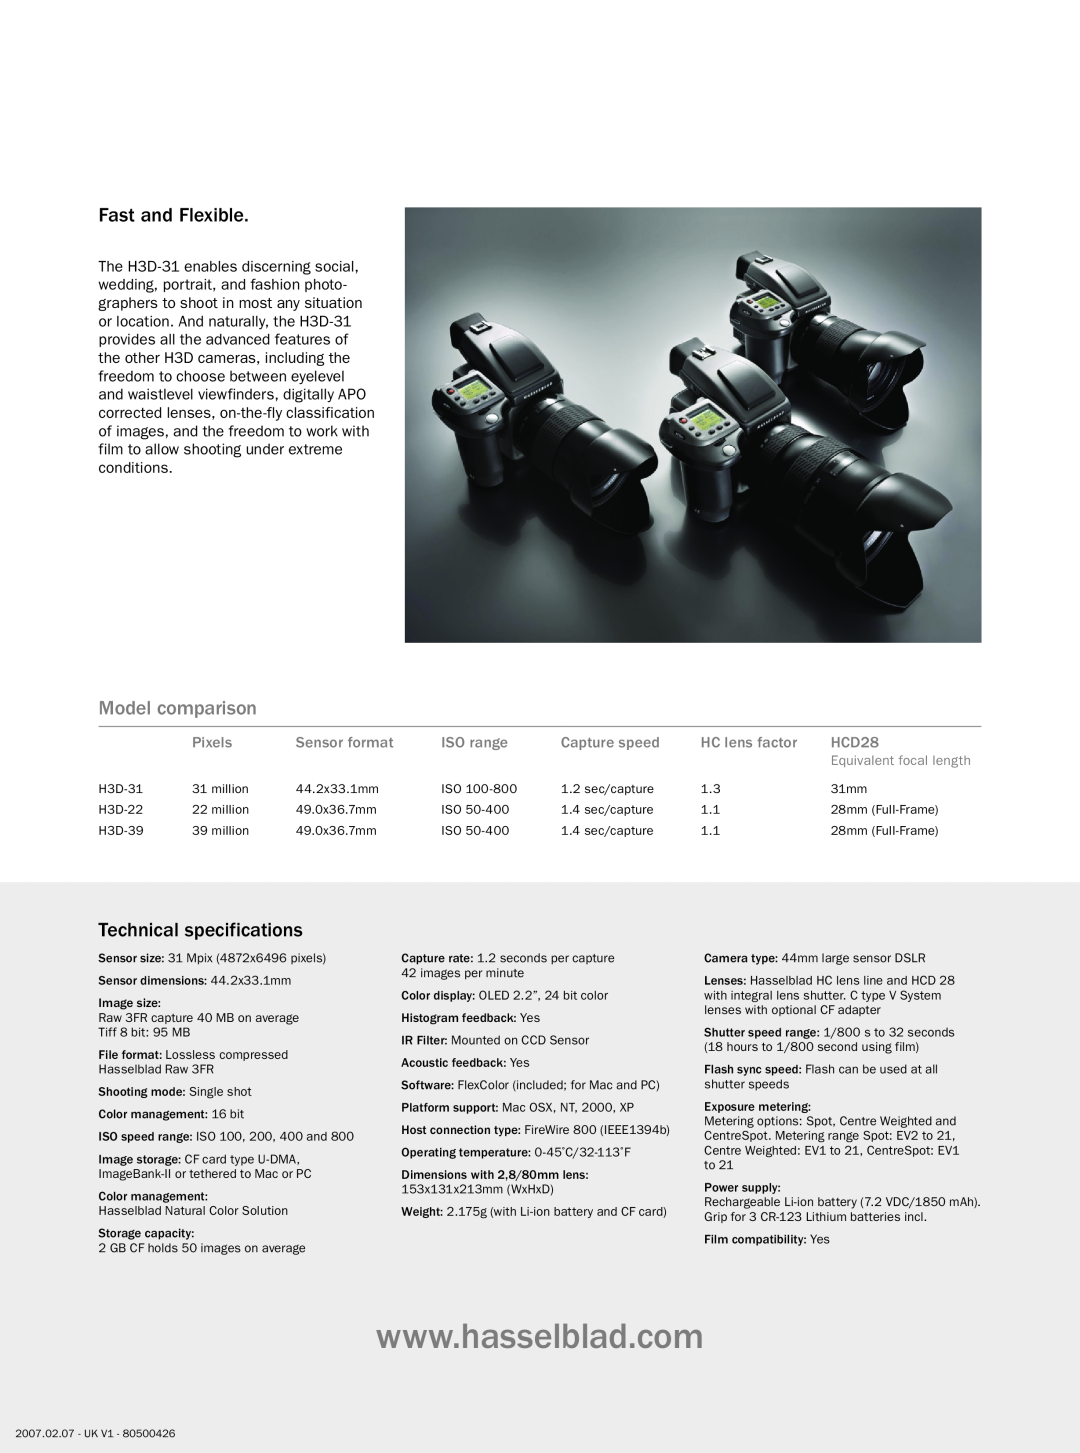 Hasselblad H3D-39 Fast and Flexible, Technical specifications, Model comparison, Pixels, Sensor format, ISO range, HCD28 